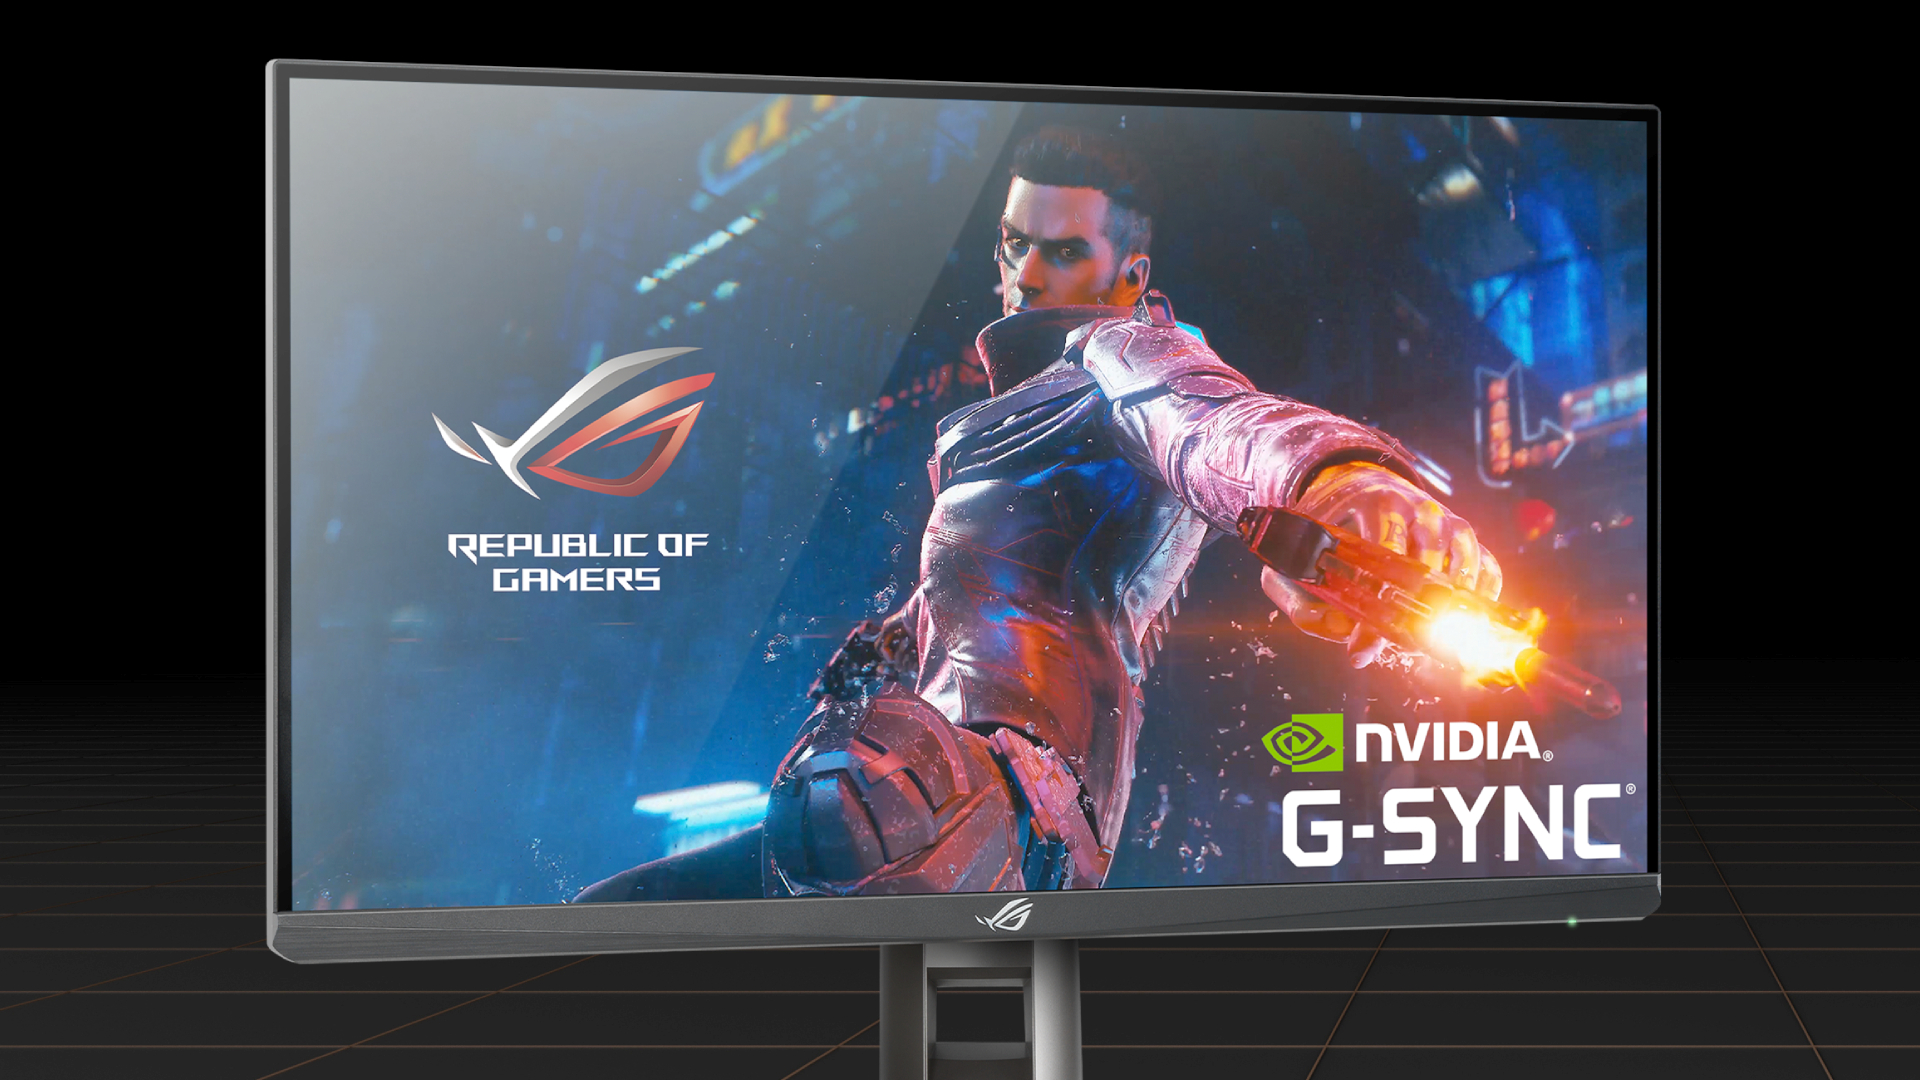 Asus ROG gaming monitor outpaces GPU tech at 500Hz